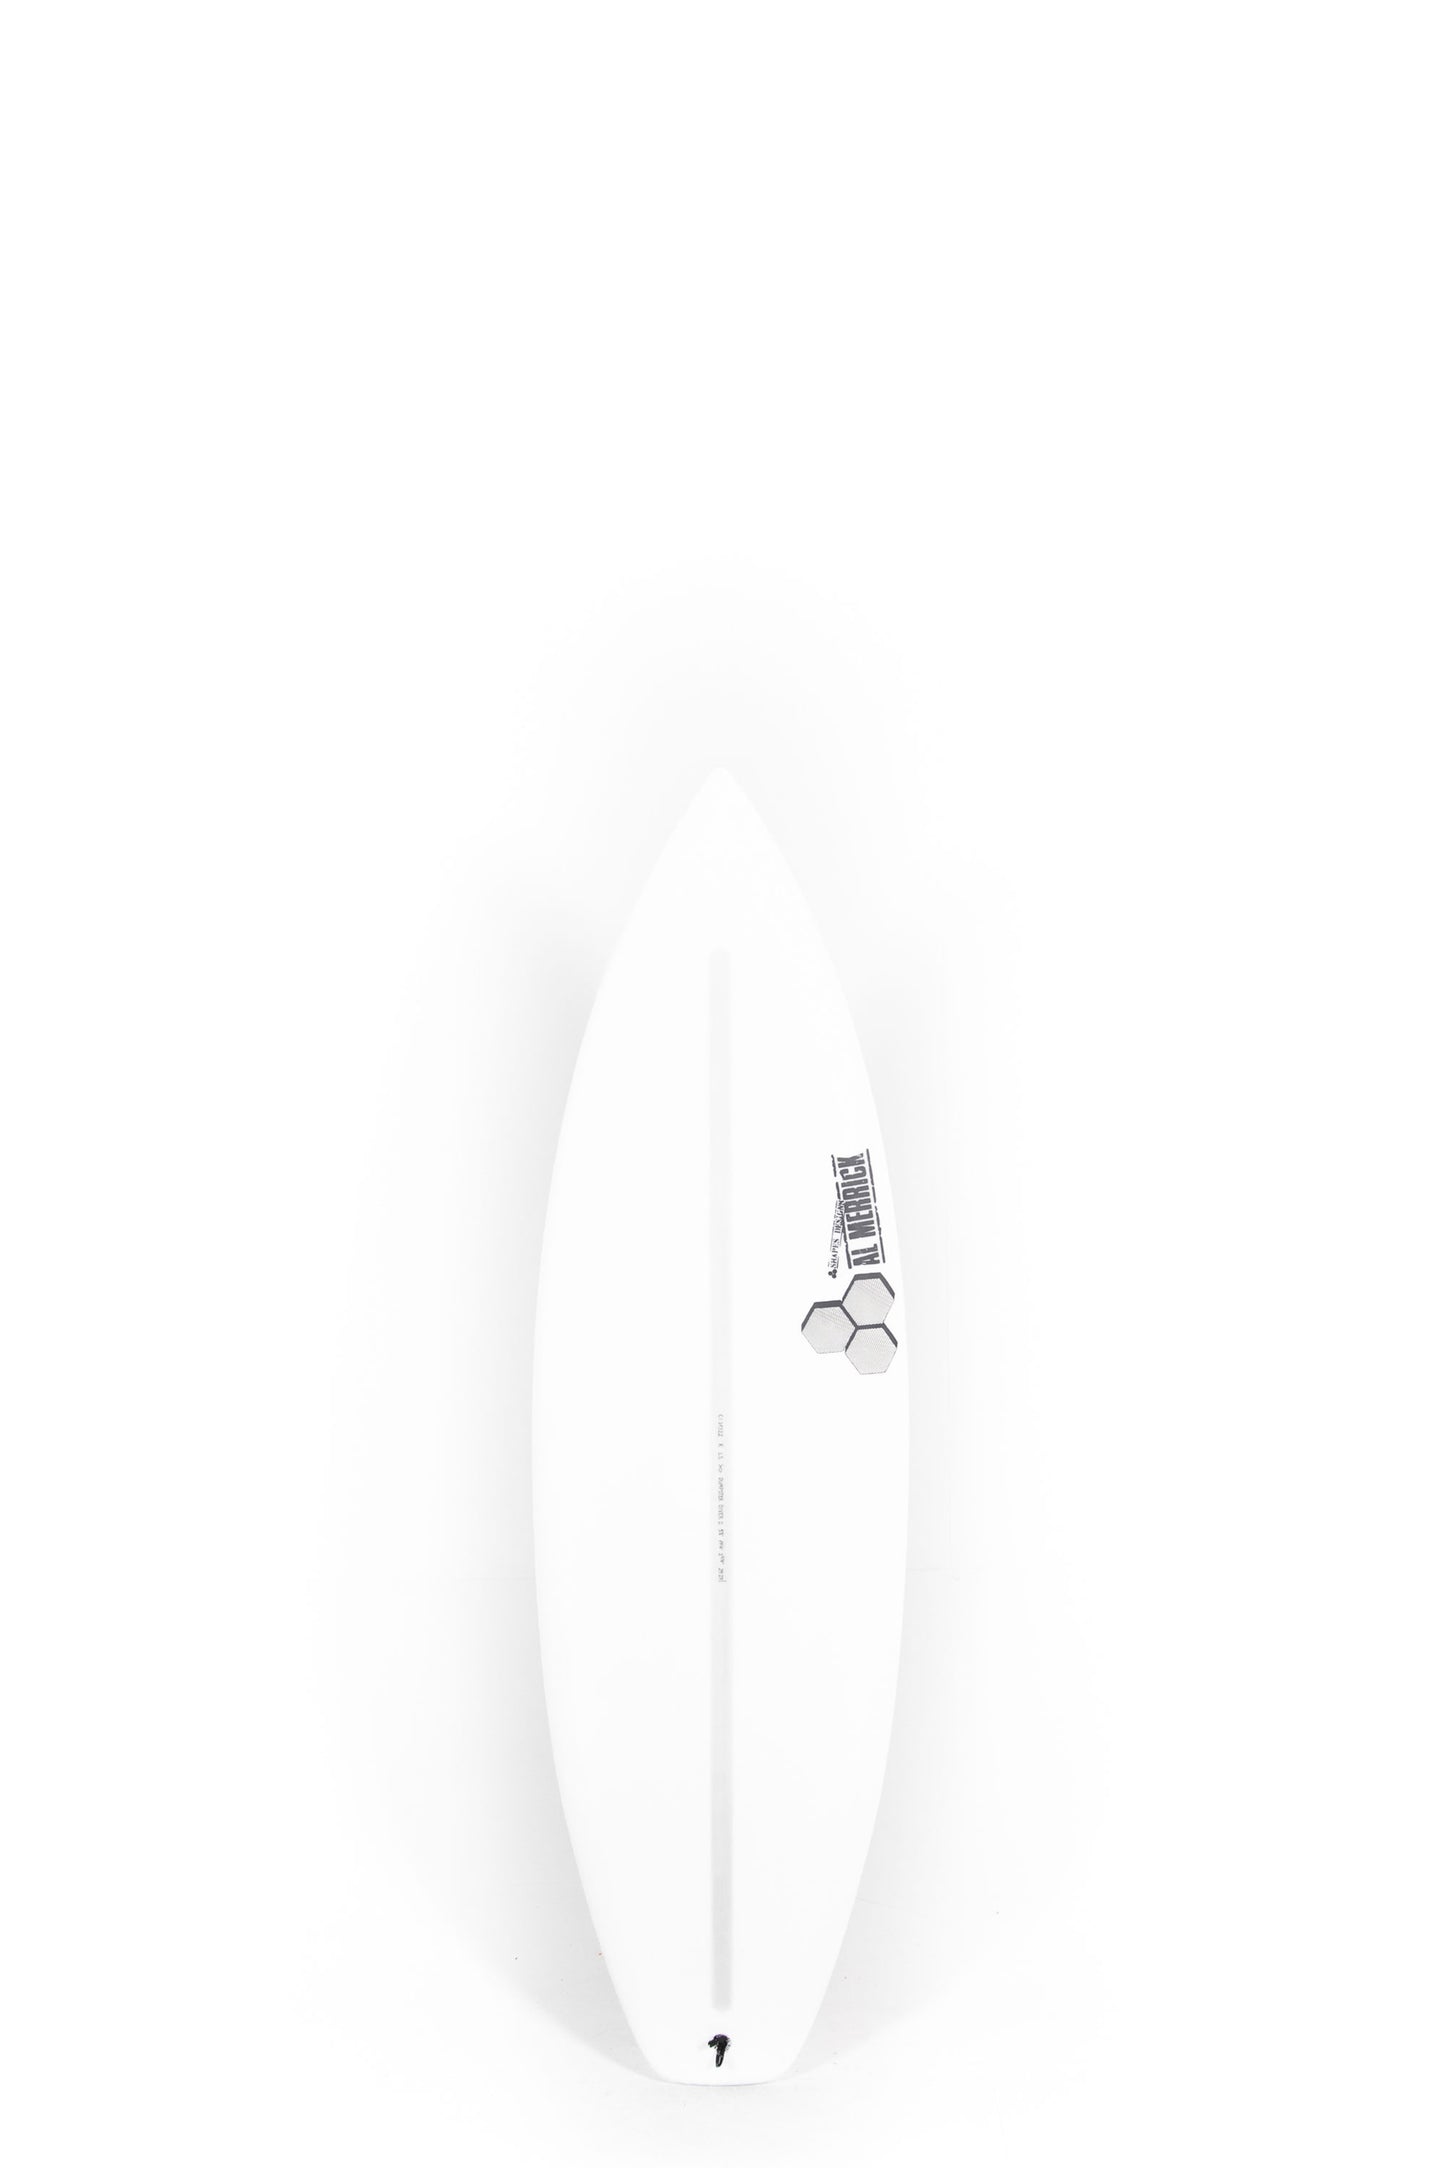 Pukas-Surf-Shop-Channel-Island-Surfboards-Dumpster-Diver-2-Al-Merrick-5_8